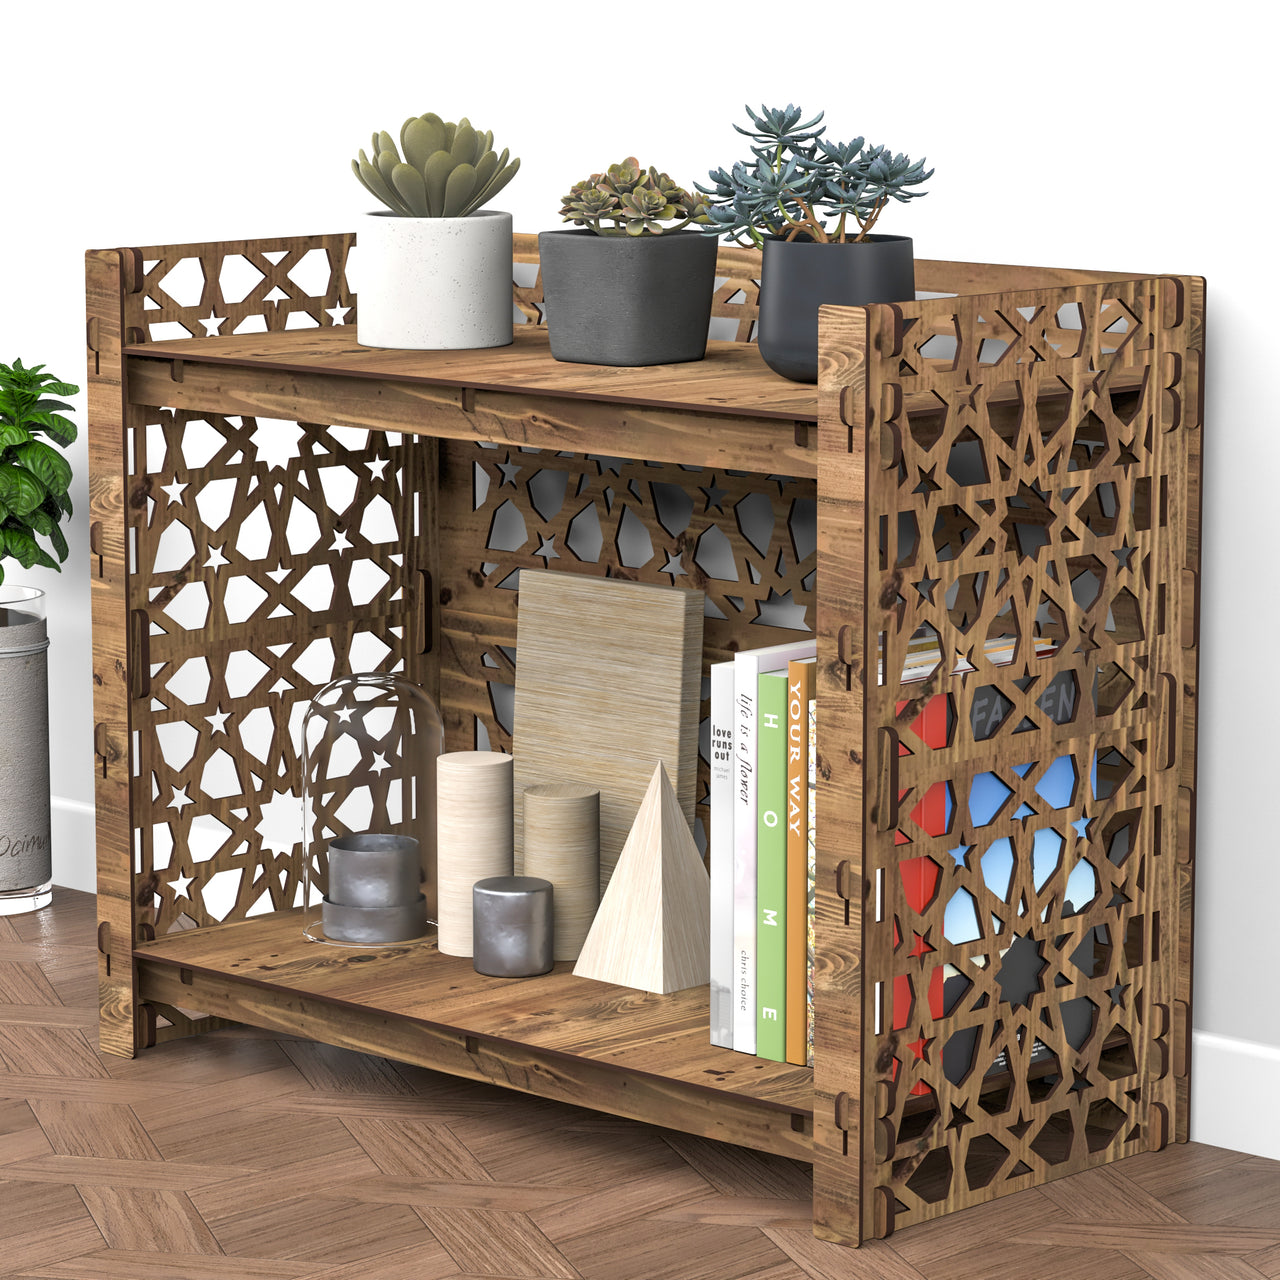 Arabic LUX 2-tier Bookshelf Bookcase Shelving Unit